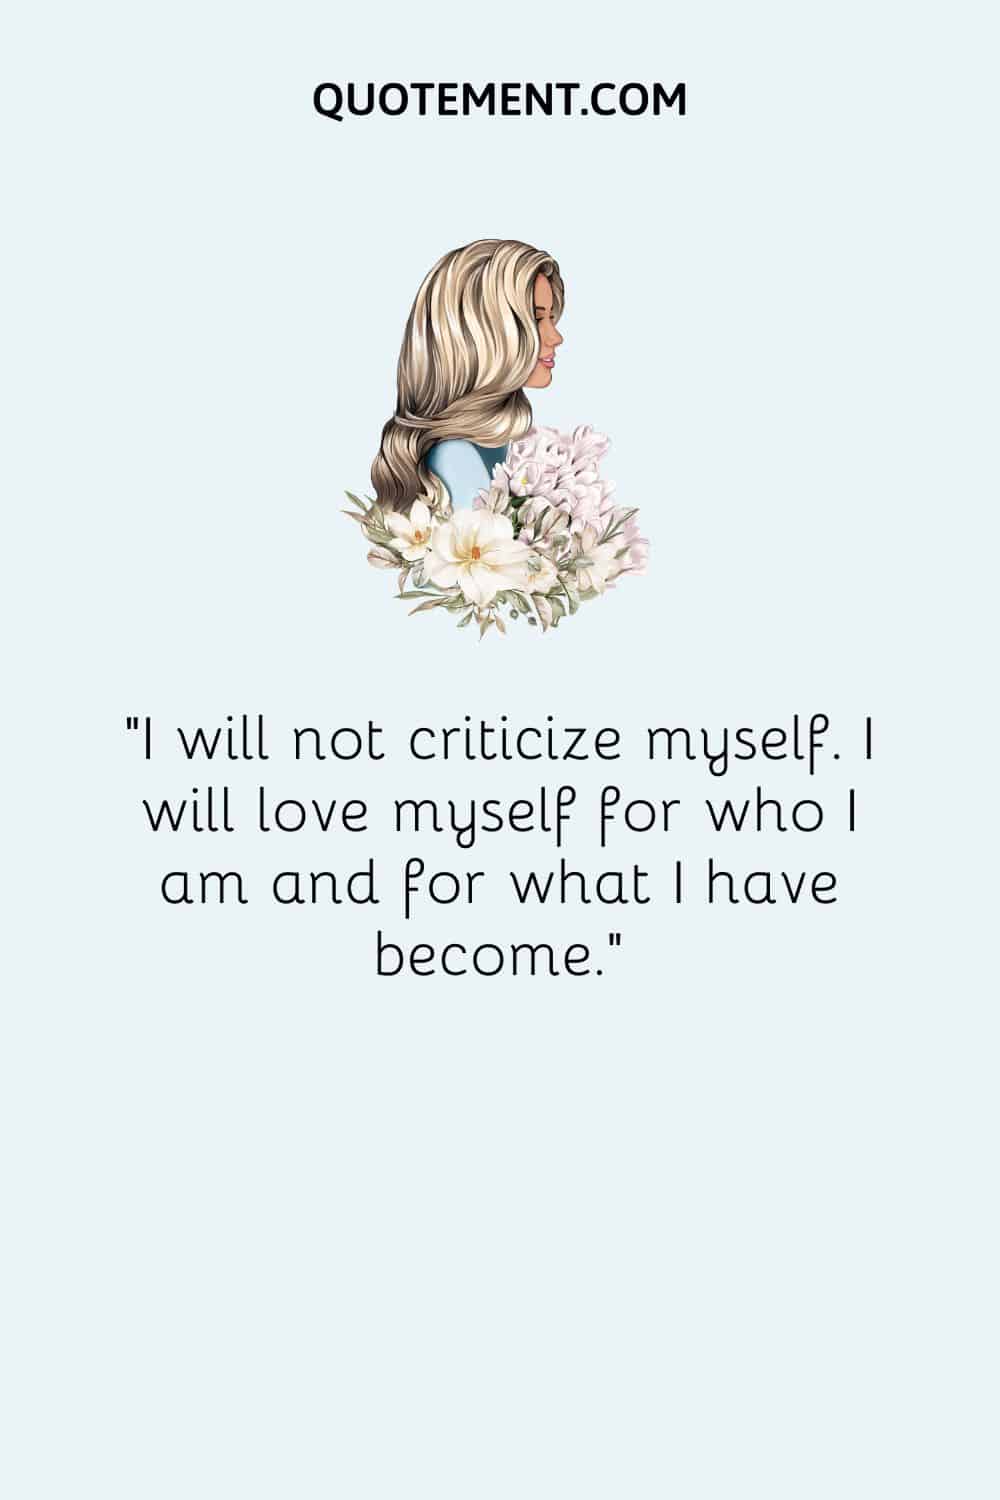 I will not criticize myself